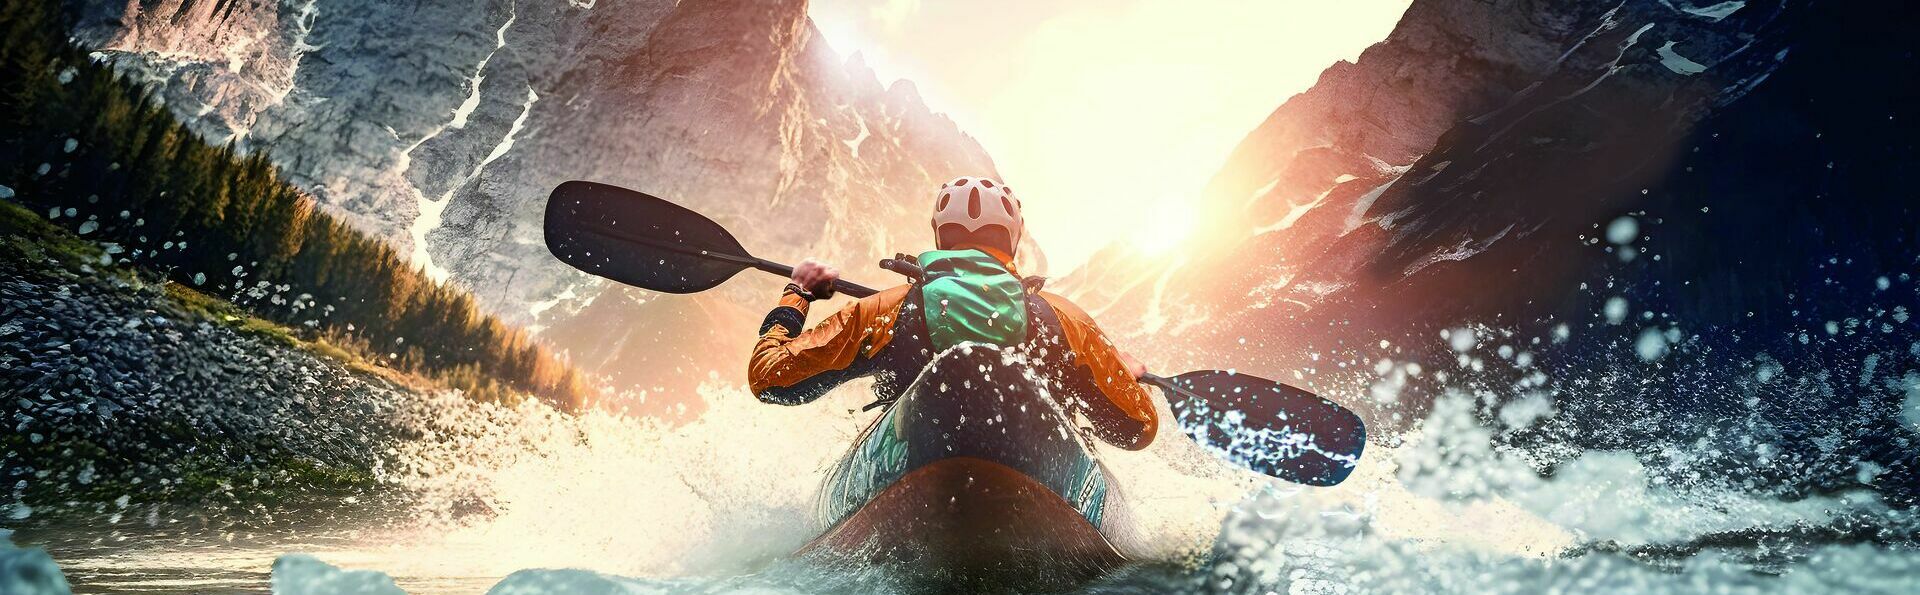 Rafting Extreme sport kayak sails mountain river with sun light,